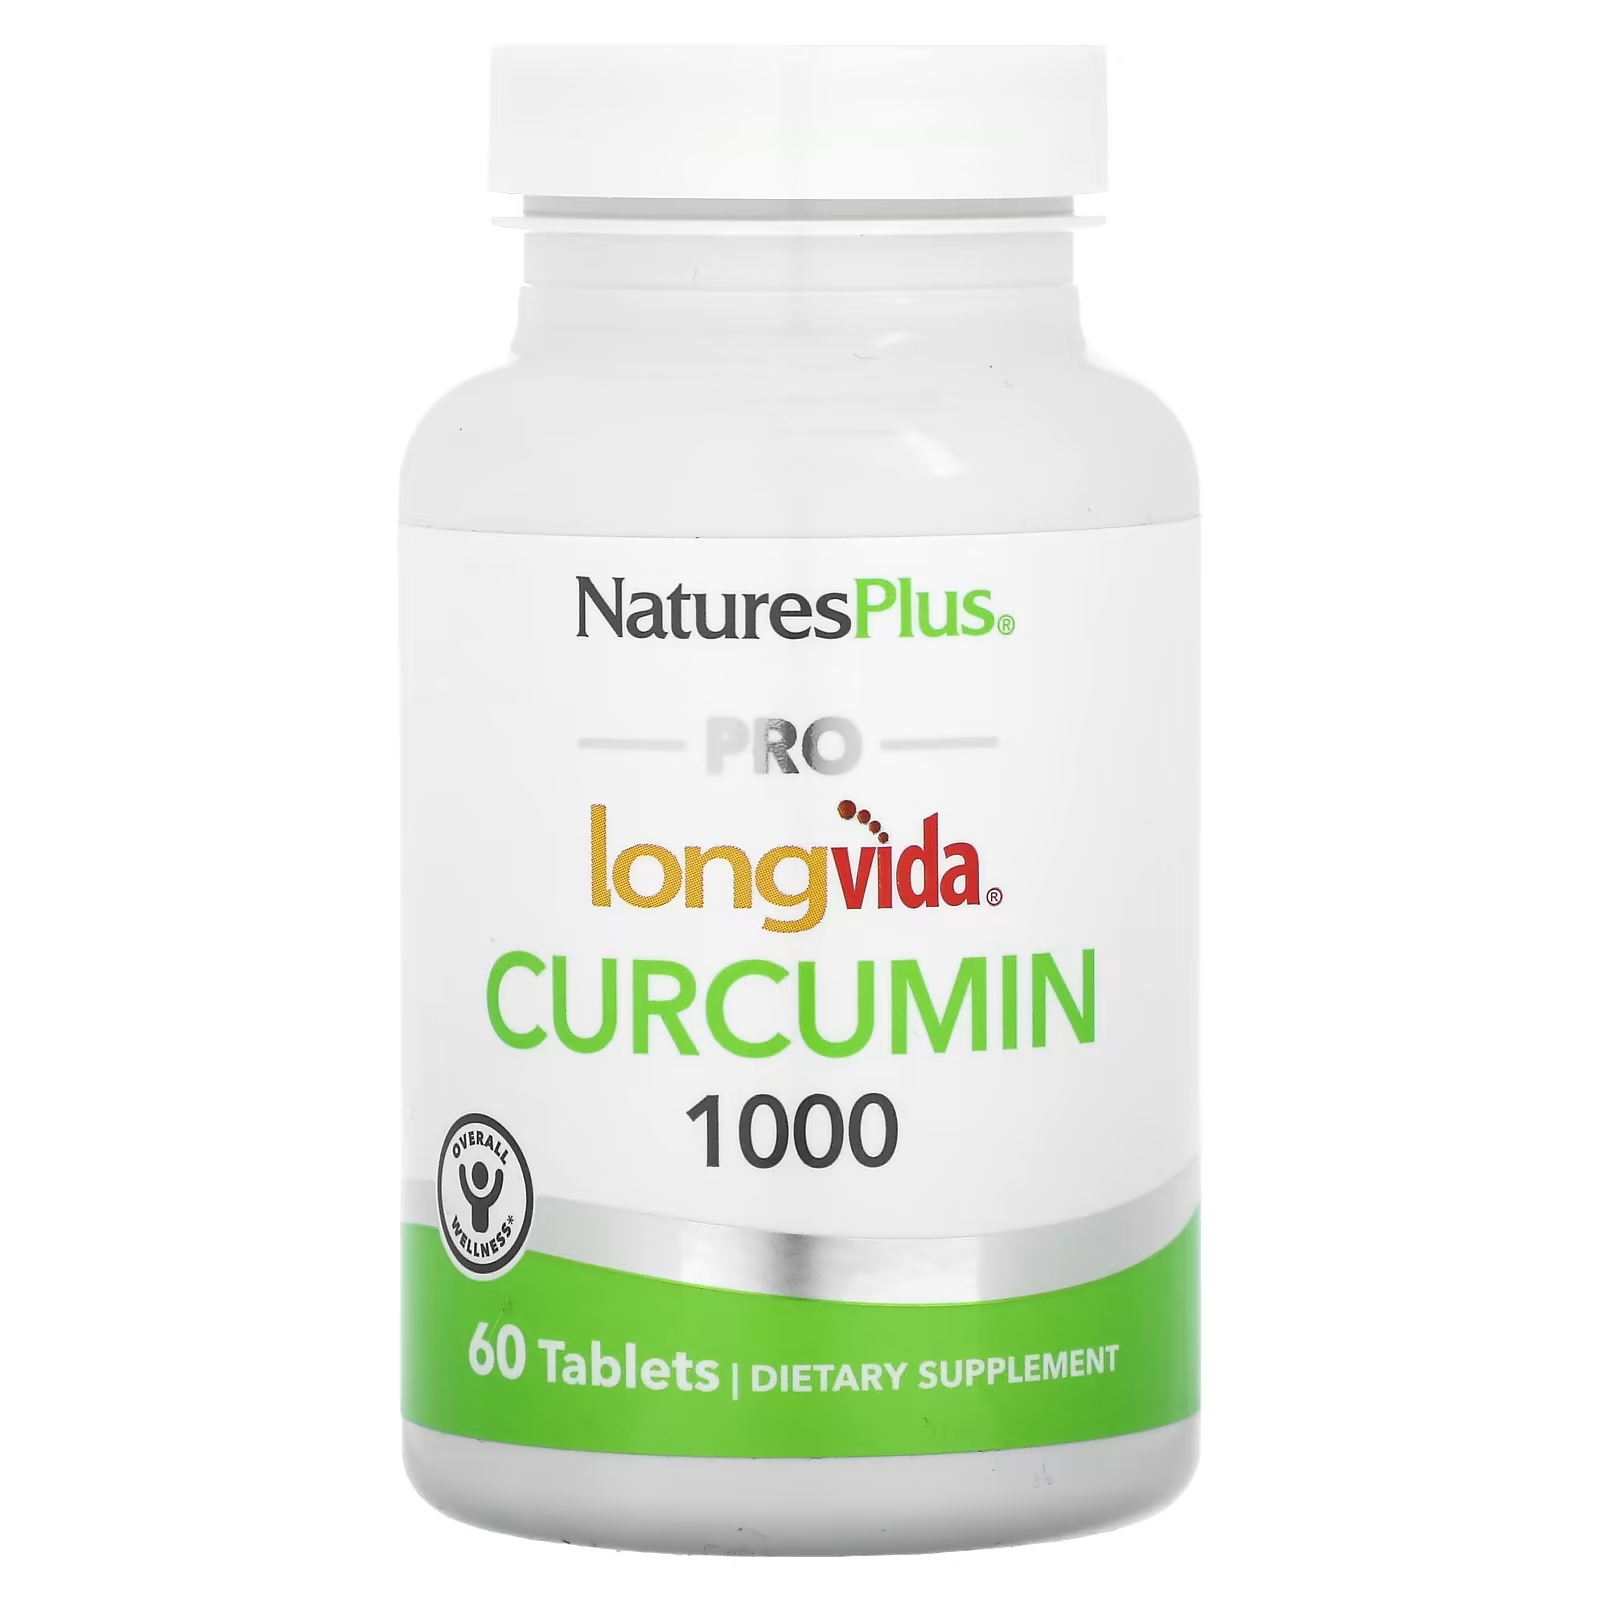 Пищевая добавка, NaturesPlus Pro Longvida Куркумин 1000, 60 таблеток пищевая добавка naturesplus для беременных